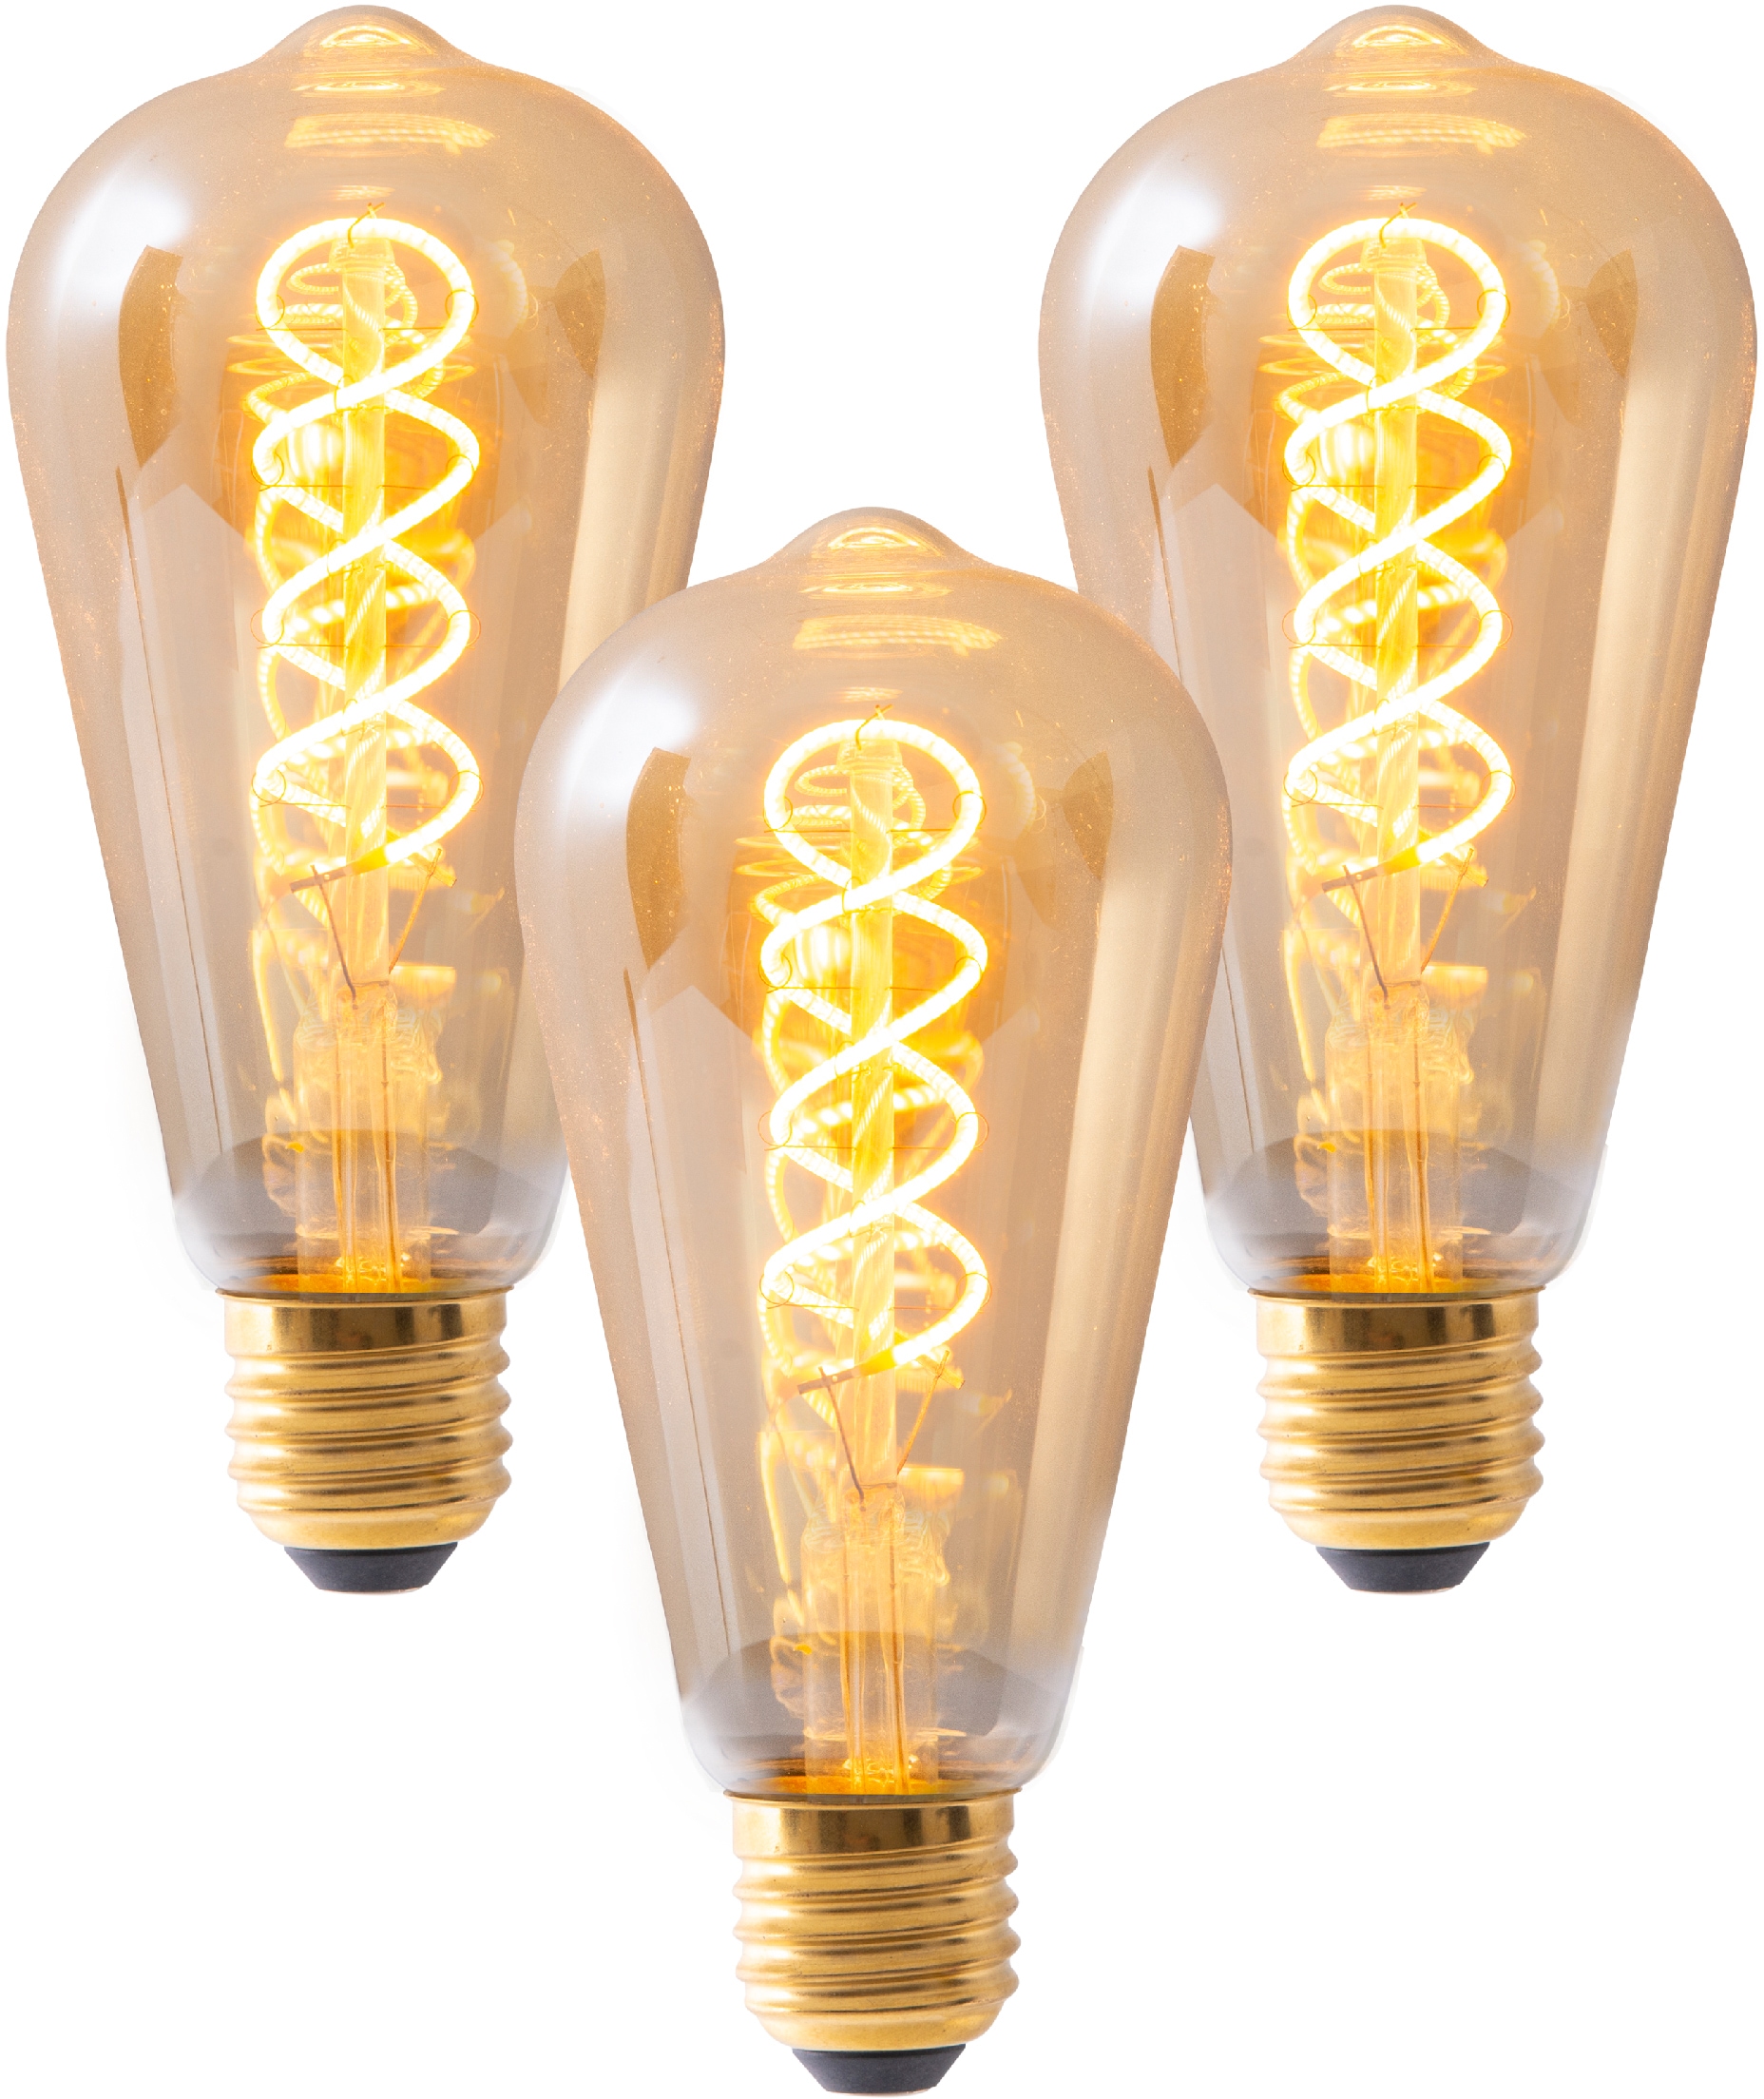 näve LED-Leuchtmittel »Dilly«, E27, 3 St., Warmweiß, Retro Leuchtmittel Filament